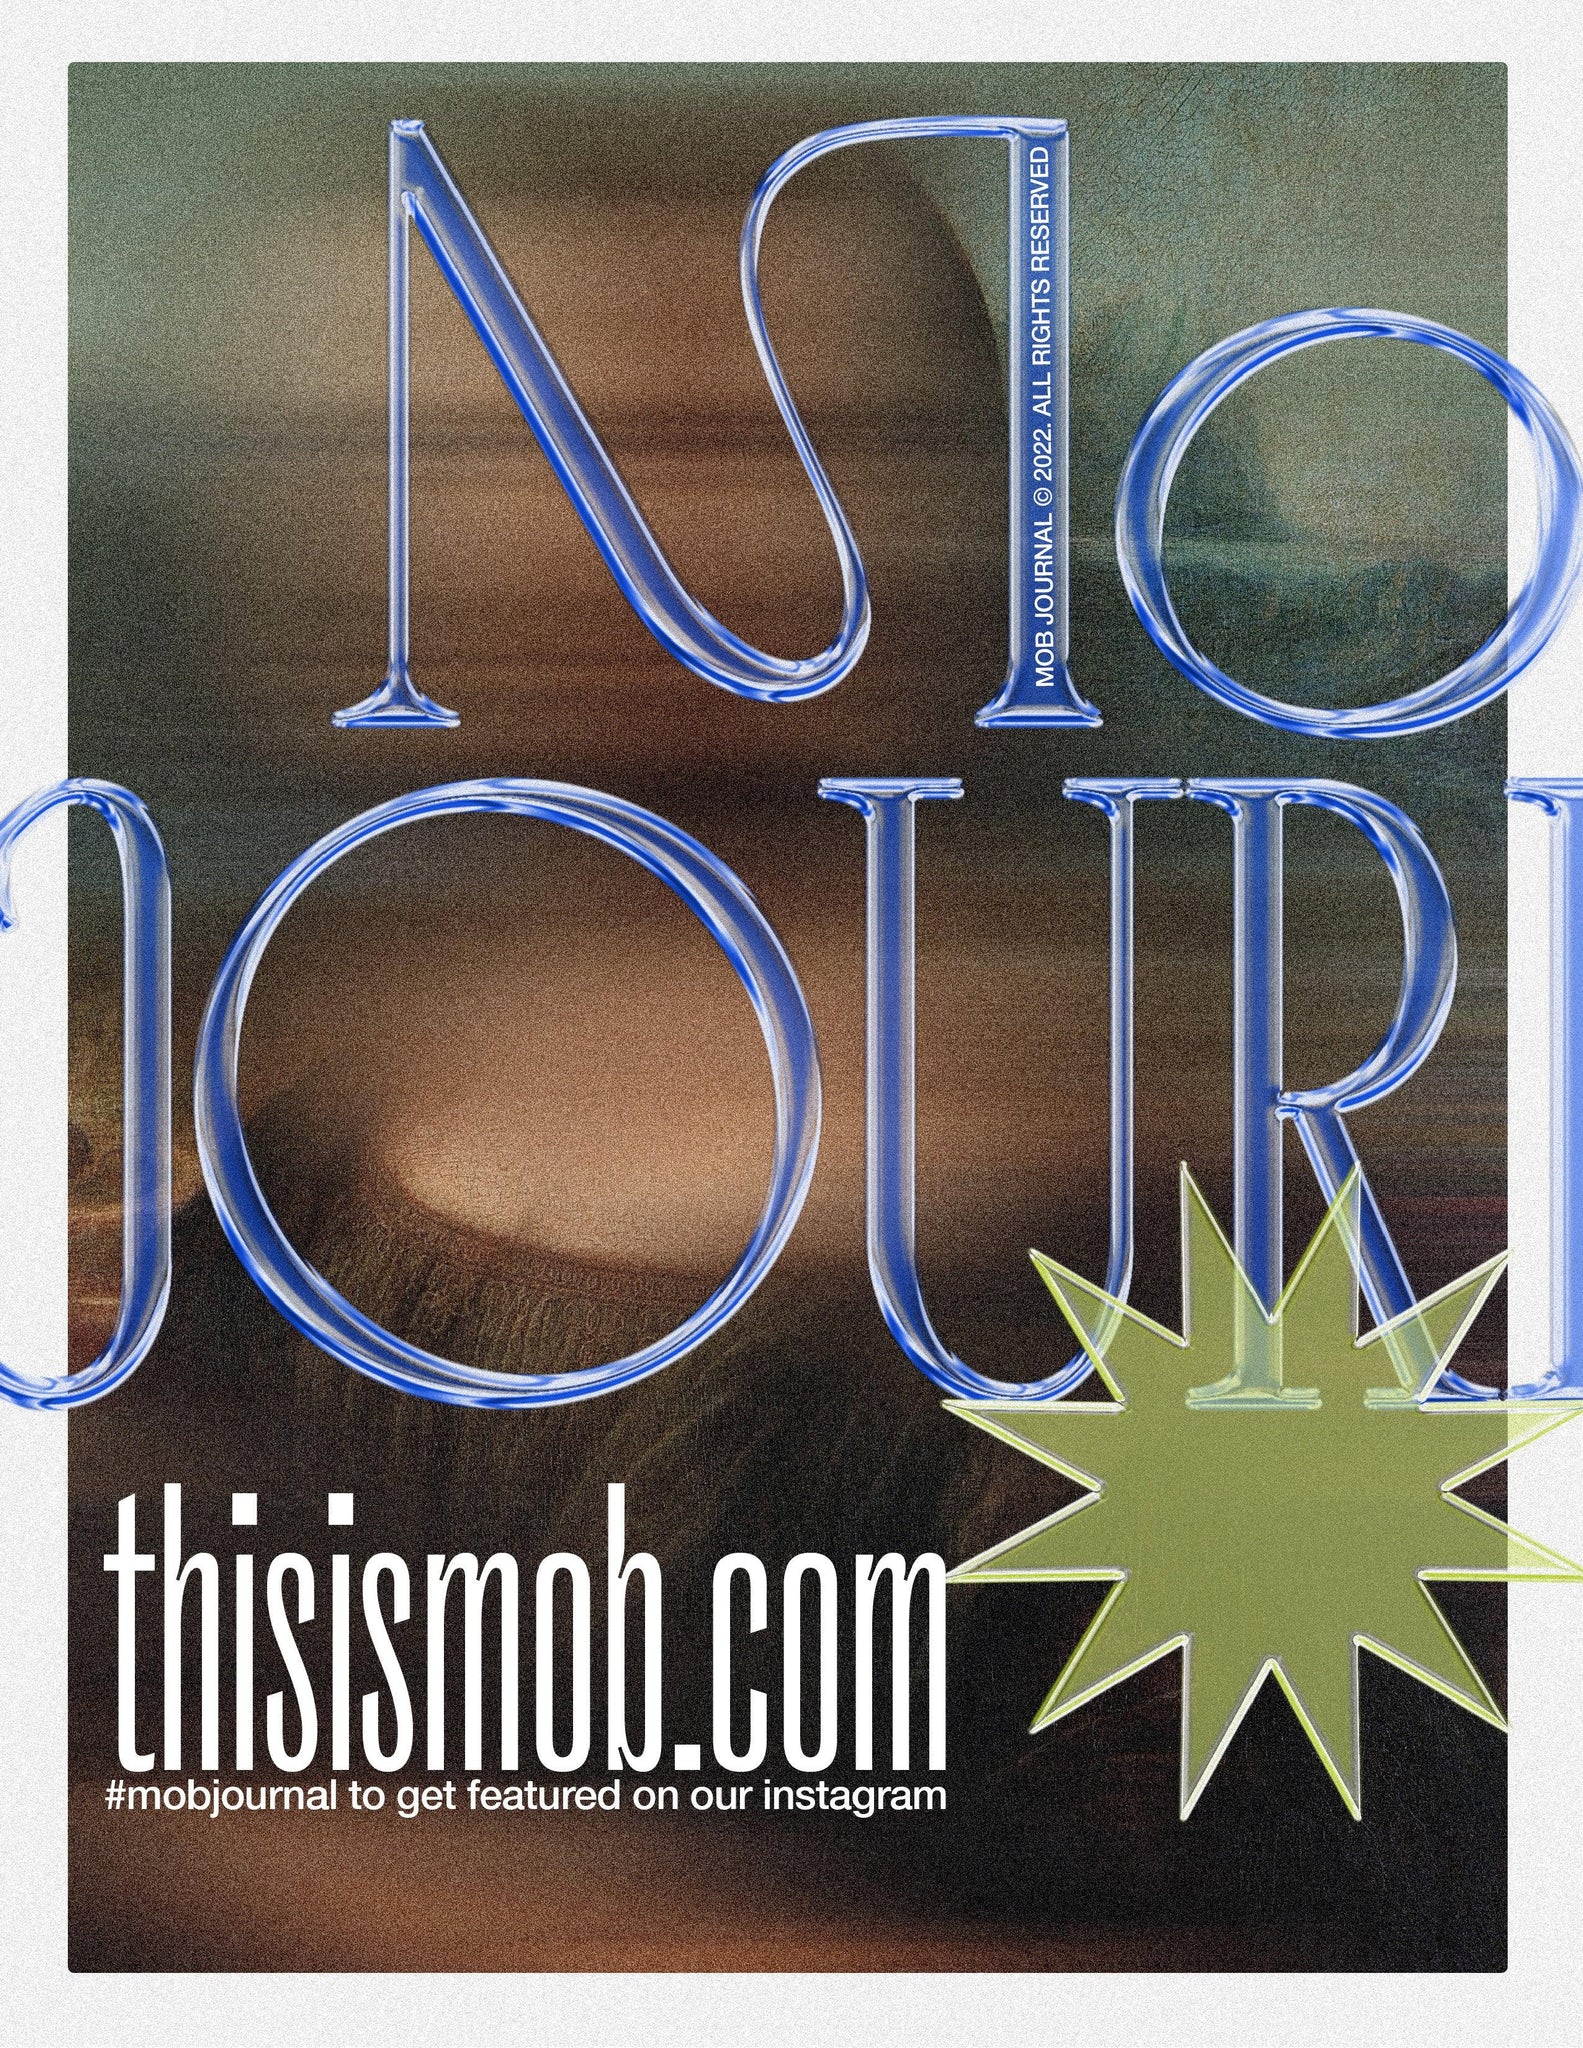 MOB JOURNAL | VOLUME TWENTY SIX | ISSUE #26 - Mob Journal